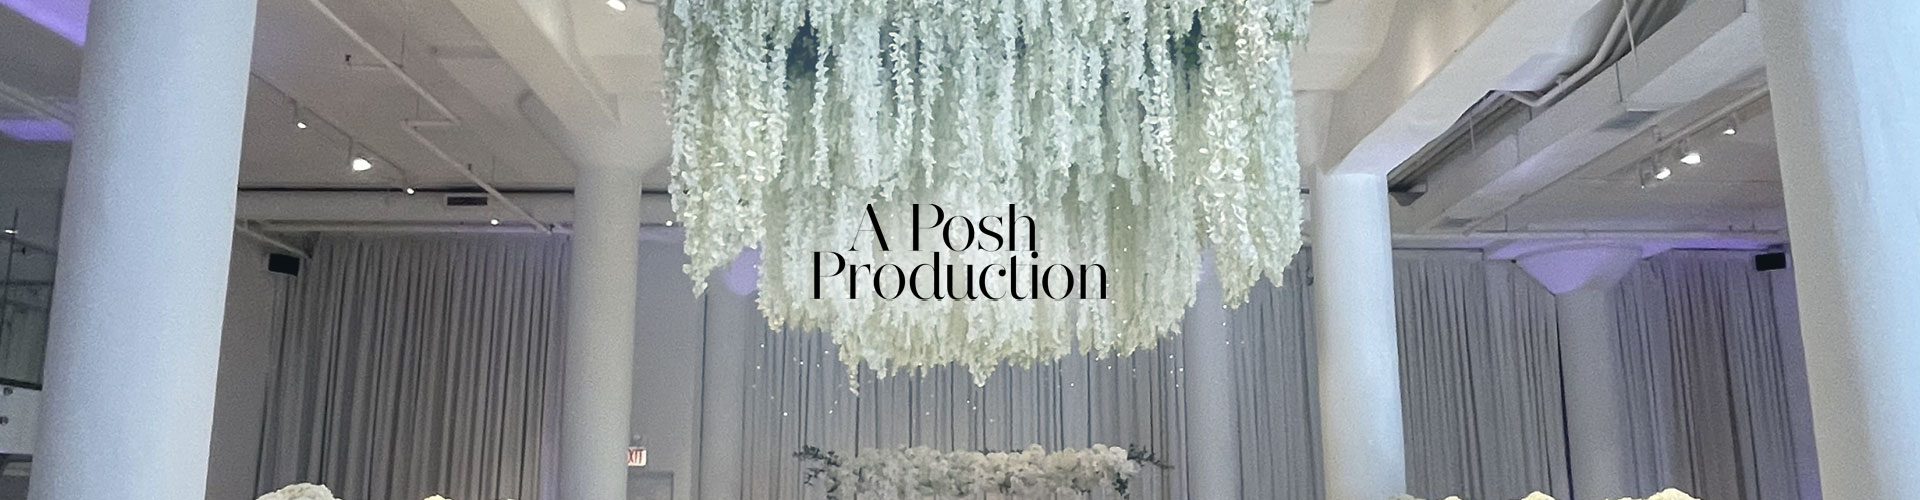 A Posh Production banner